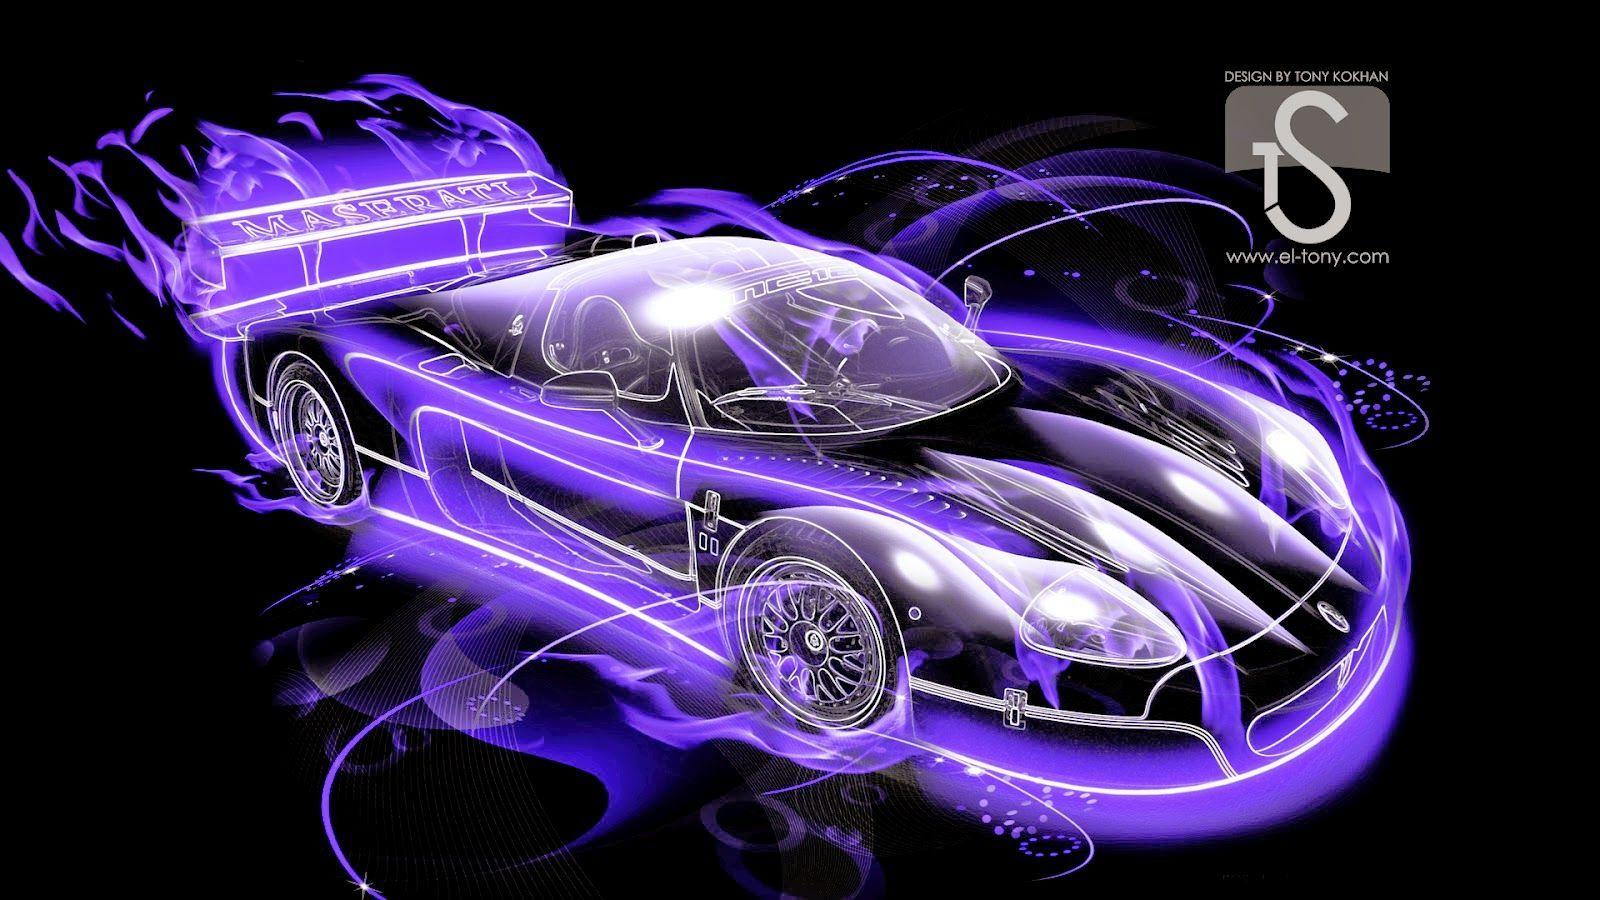 Fire 3D wallpaper of cars for desktop. Cool wallpaper cars, Cool car picture, Cool car wallpaper hd